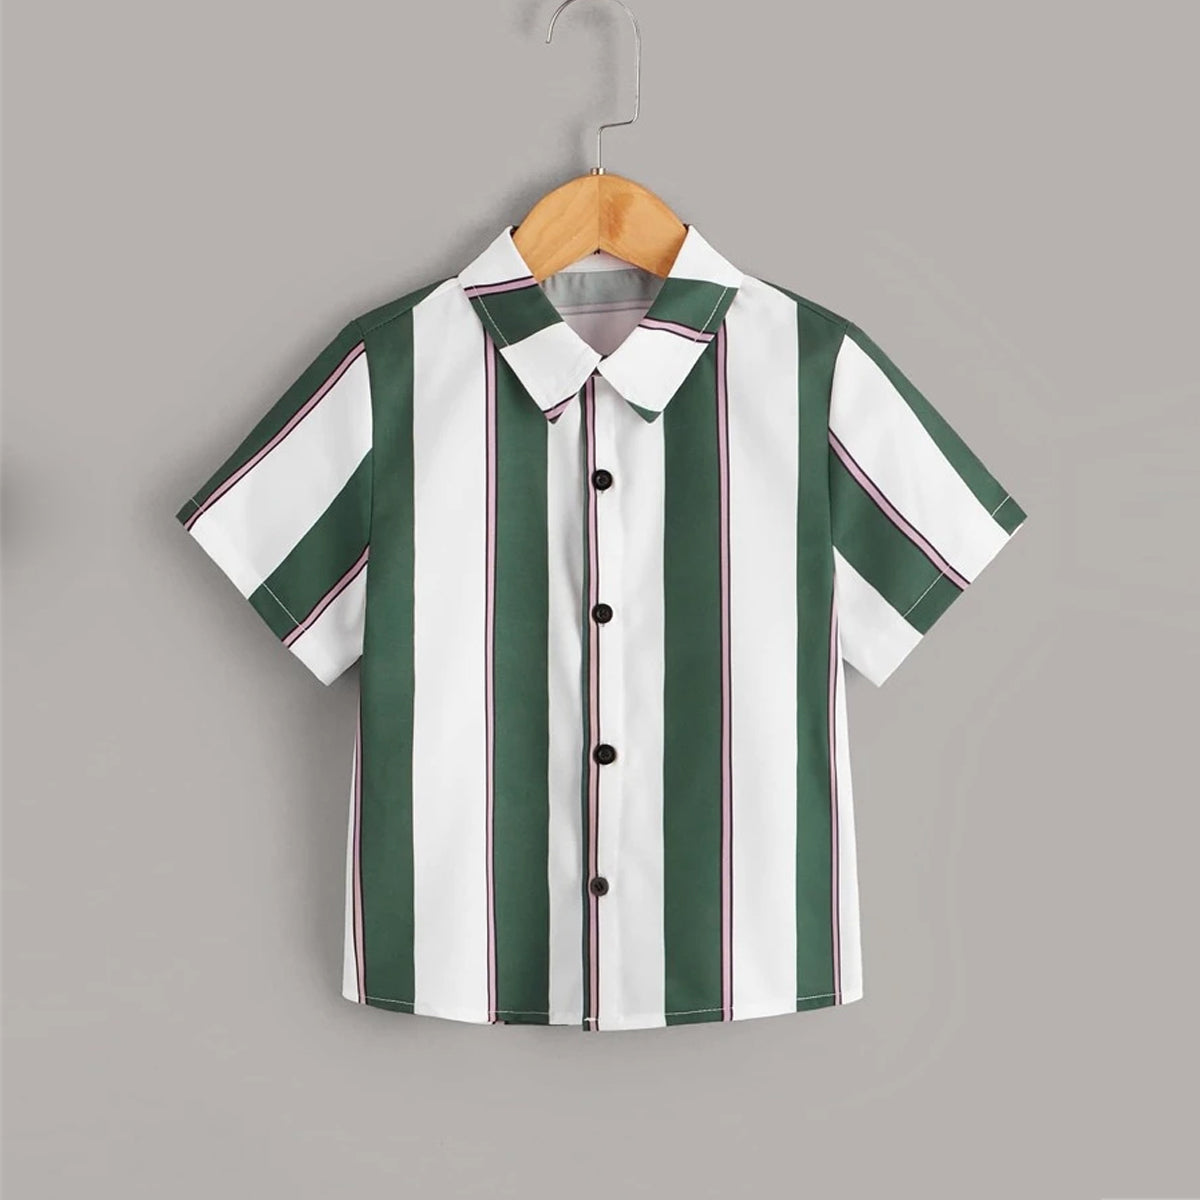 Venutaloza Button Front Striped Shirt For Boy.